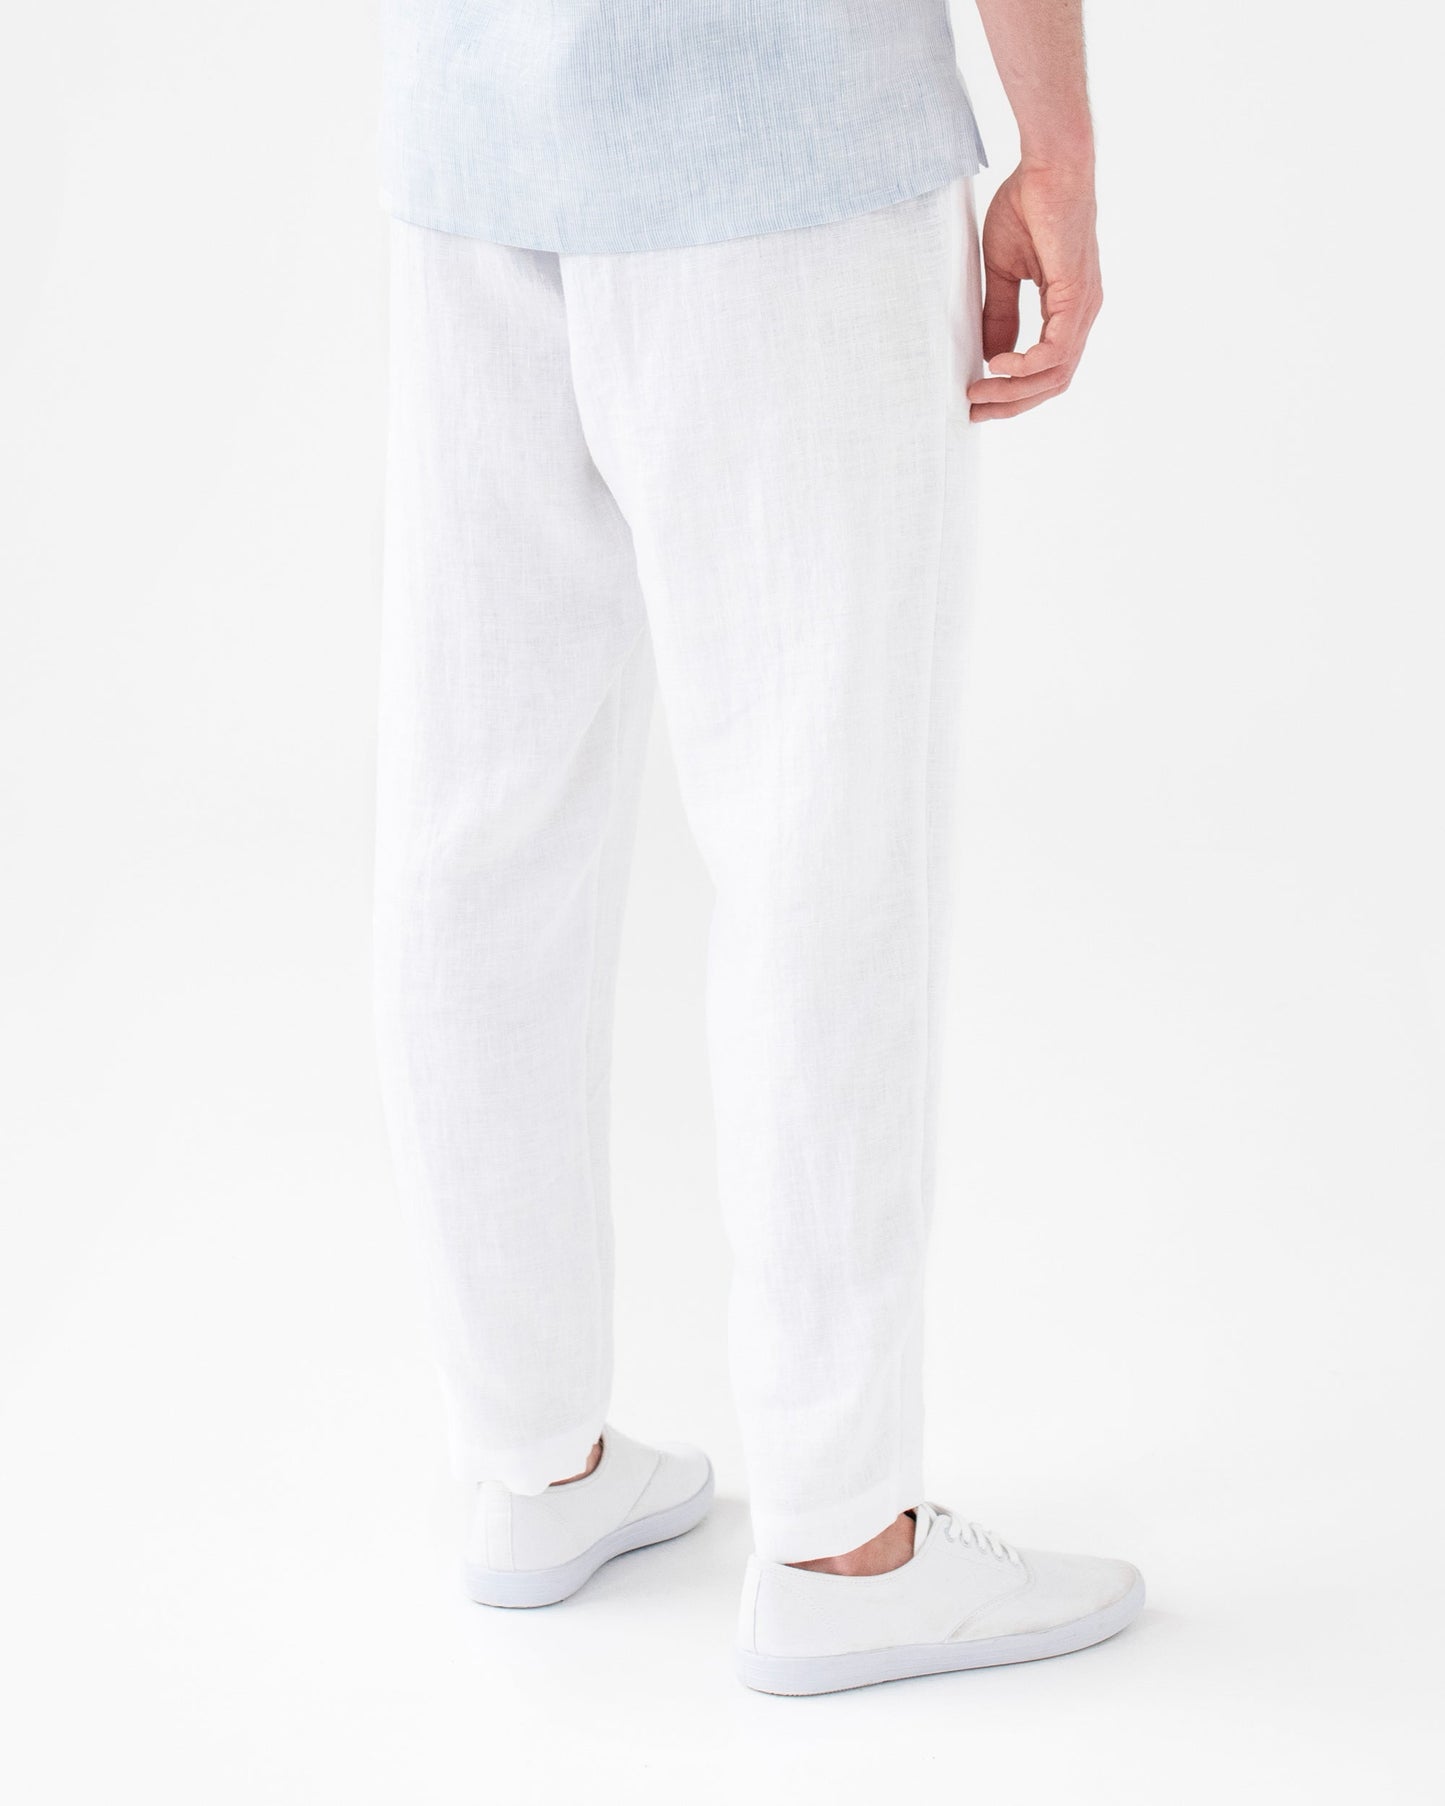 Men's Linen Pants TRUCKEE in White | MagicLinen